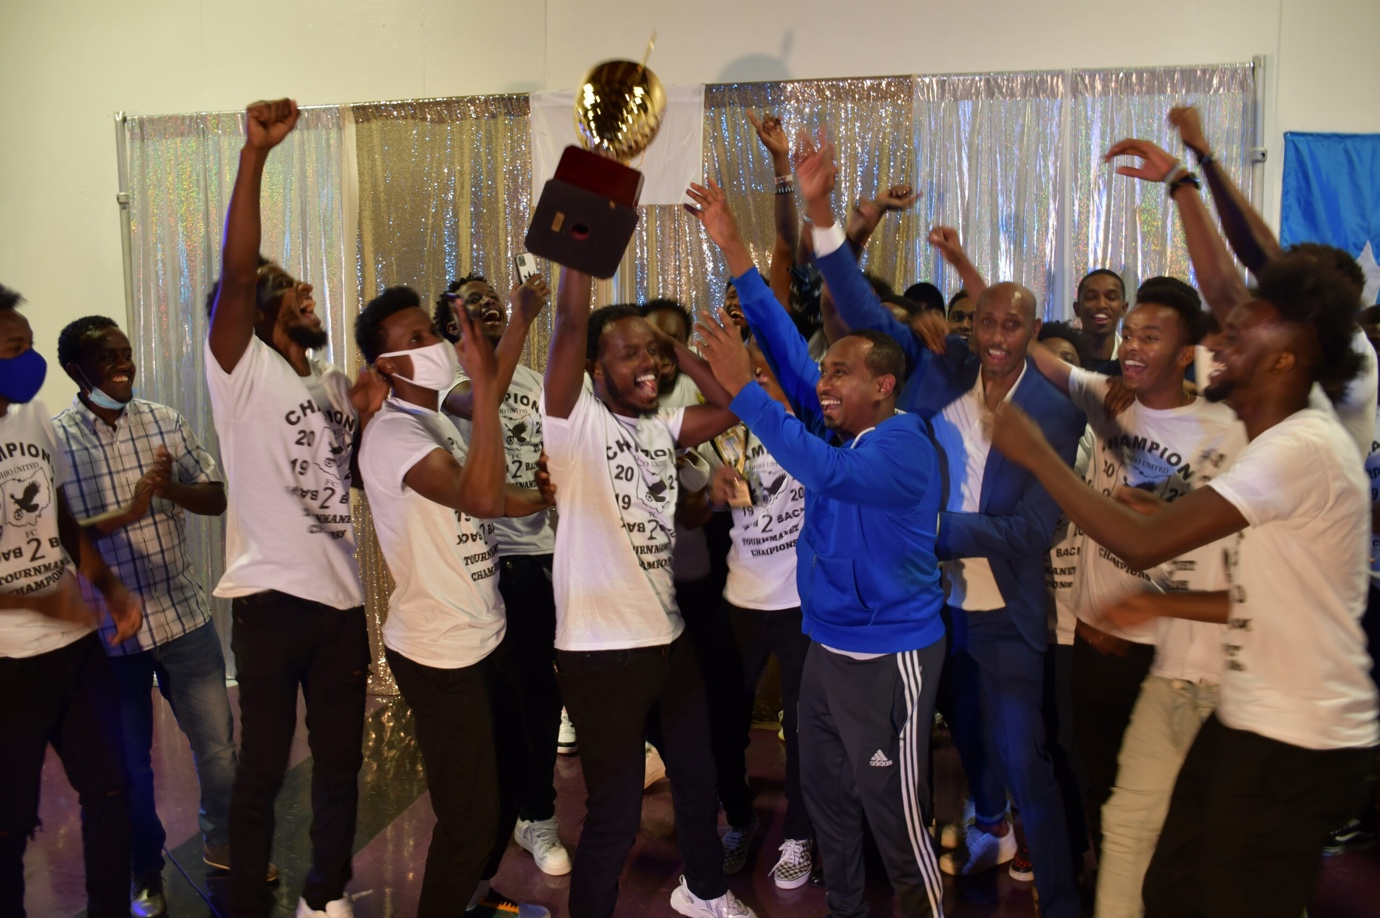 Youth initiative program by Somali Community Link in Ohio